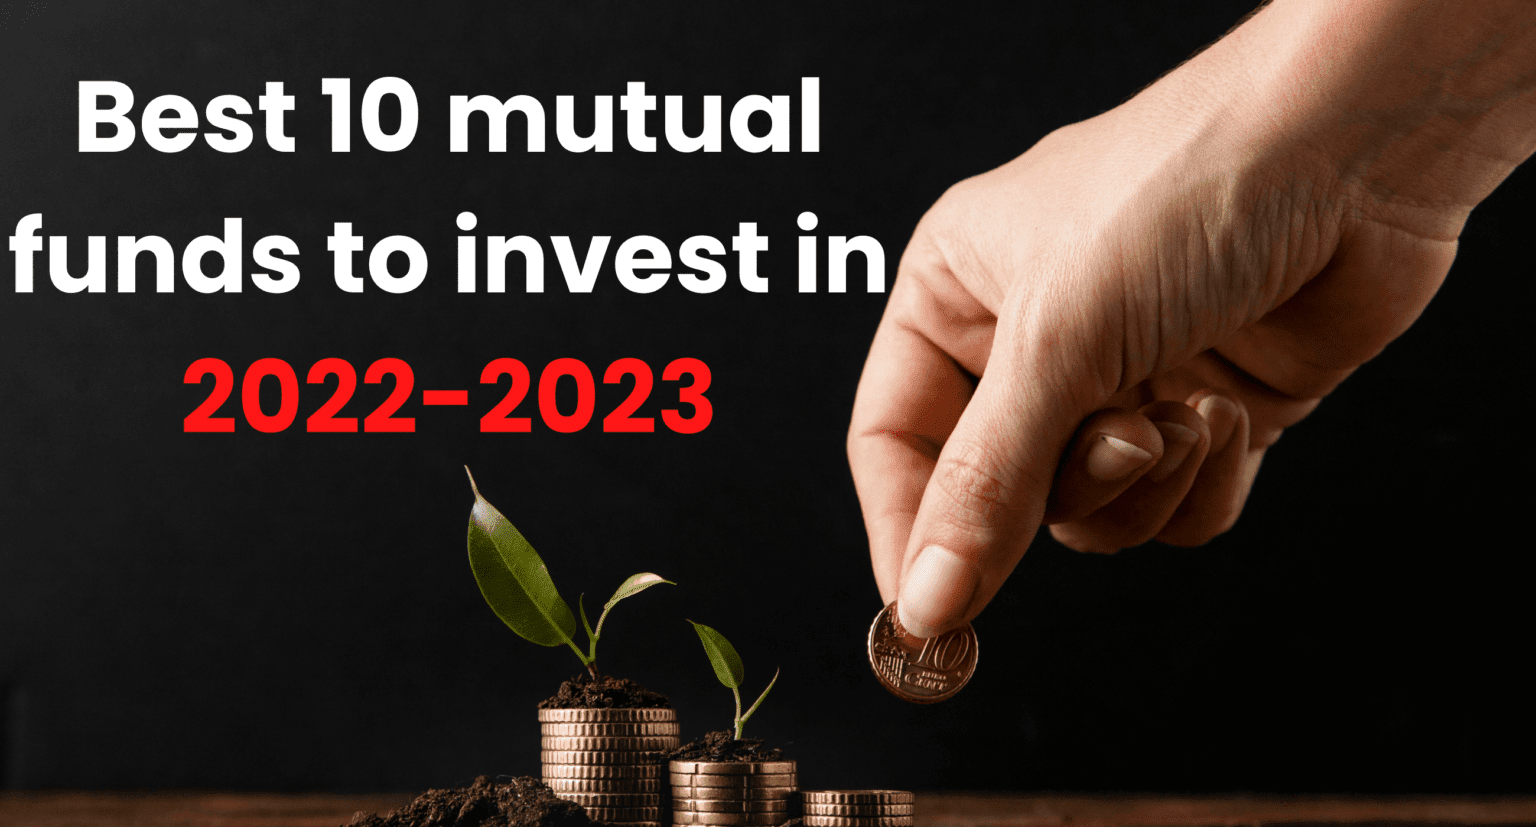 Best 10 Mutual Funds To Invest In 2022 2023 2022 2023 में निवेश करने के लिए सर्वश्रेष्ठ 10 2083